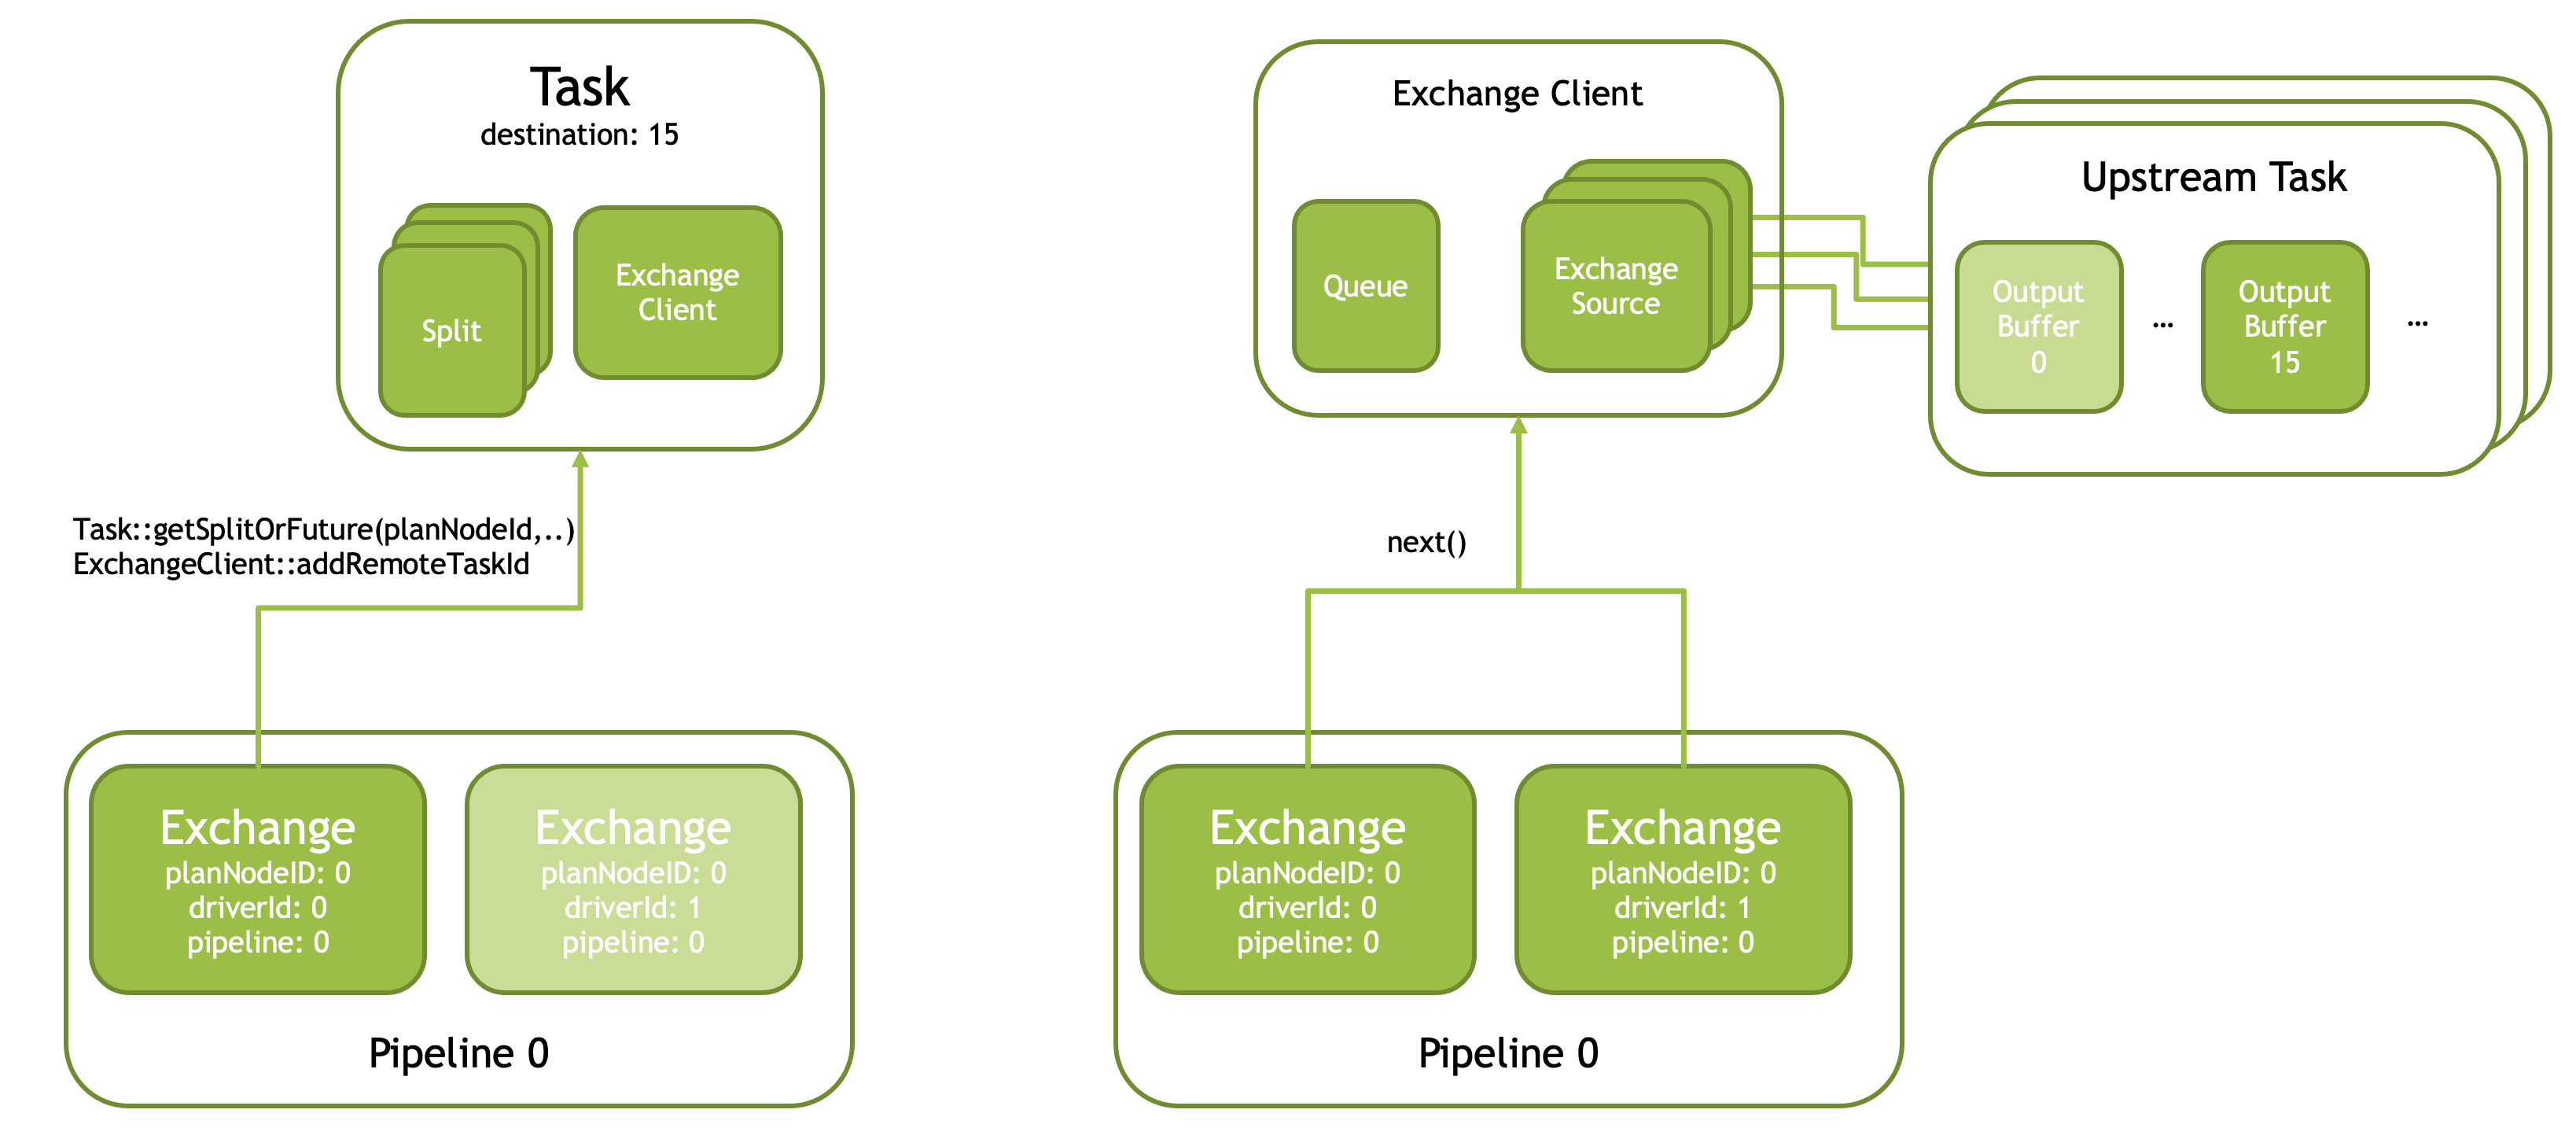 velox-exchange-source.png